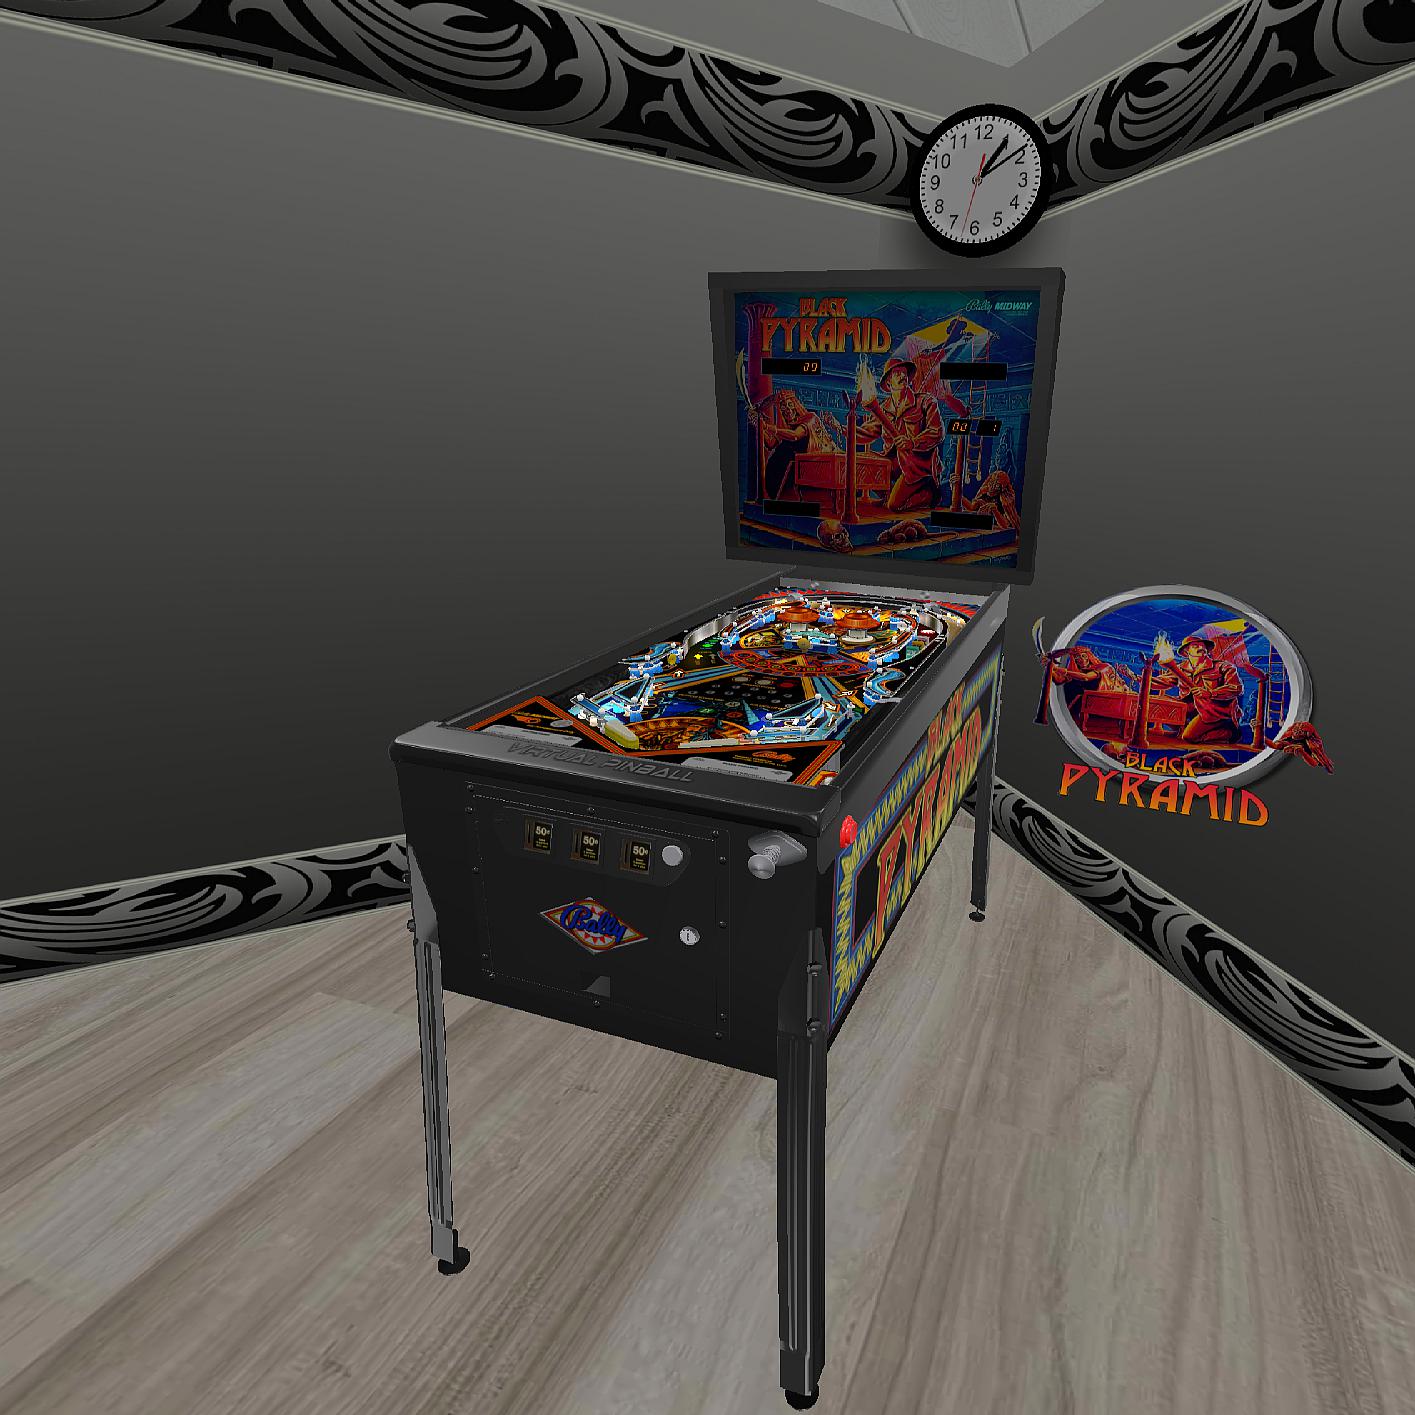 VR Room Black Pyramid (Bally 1984) 1.0